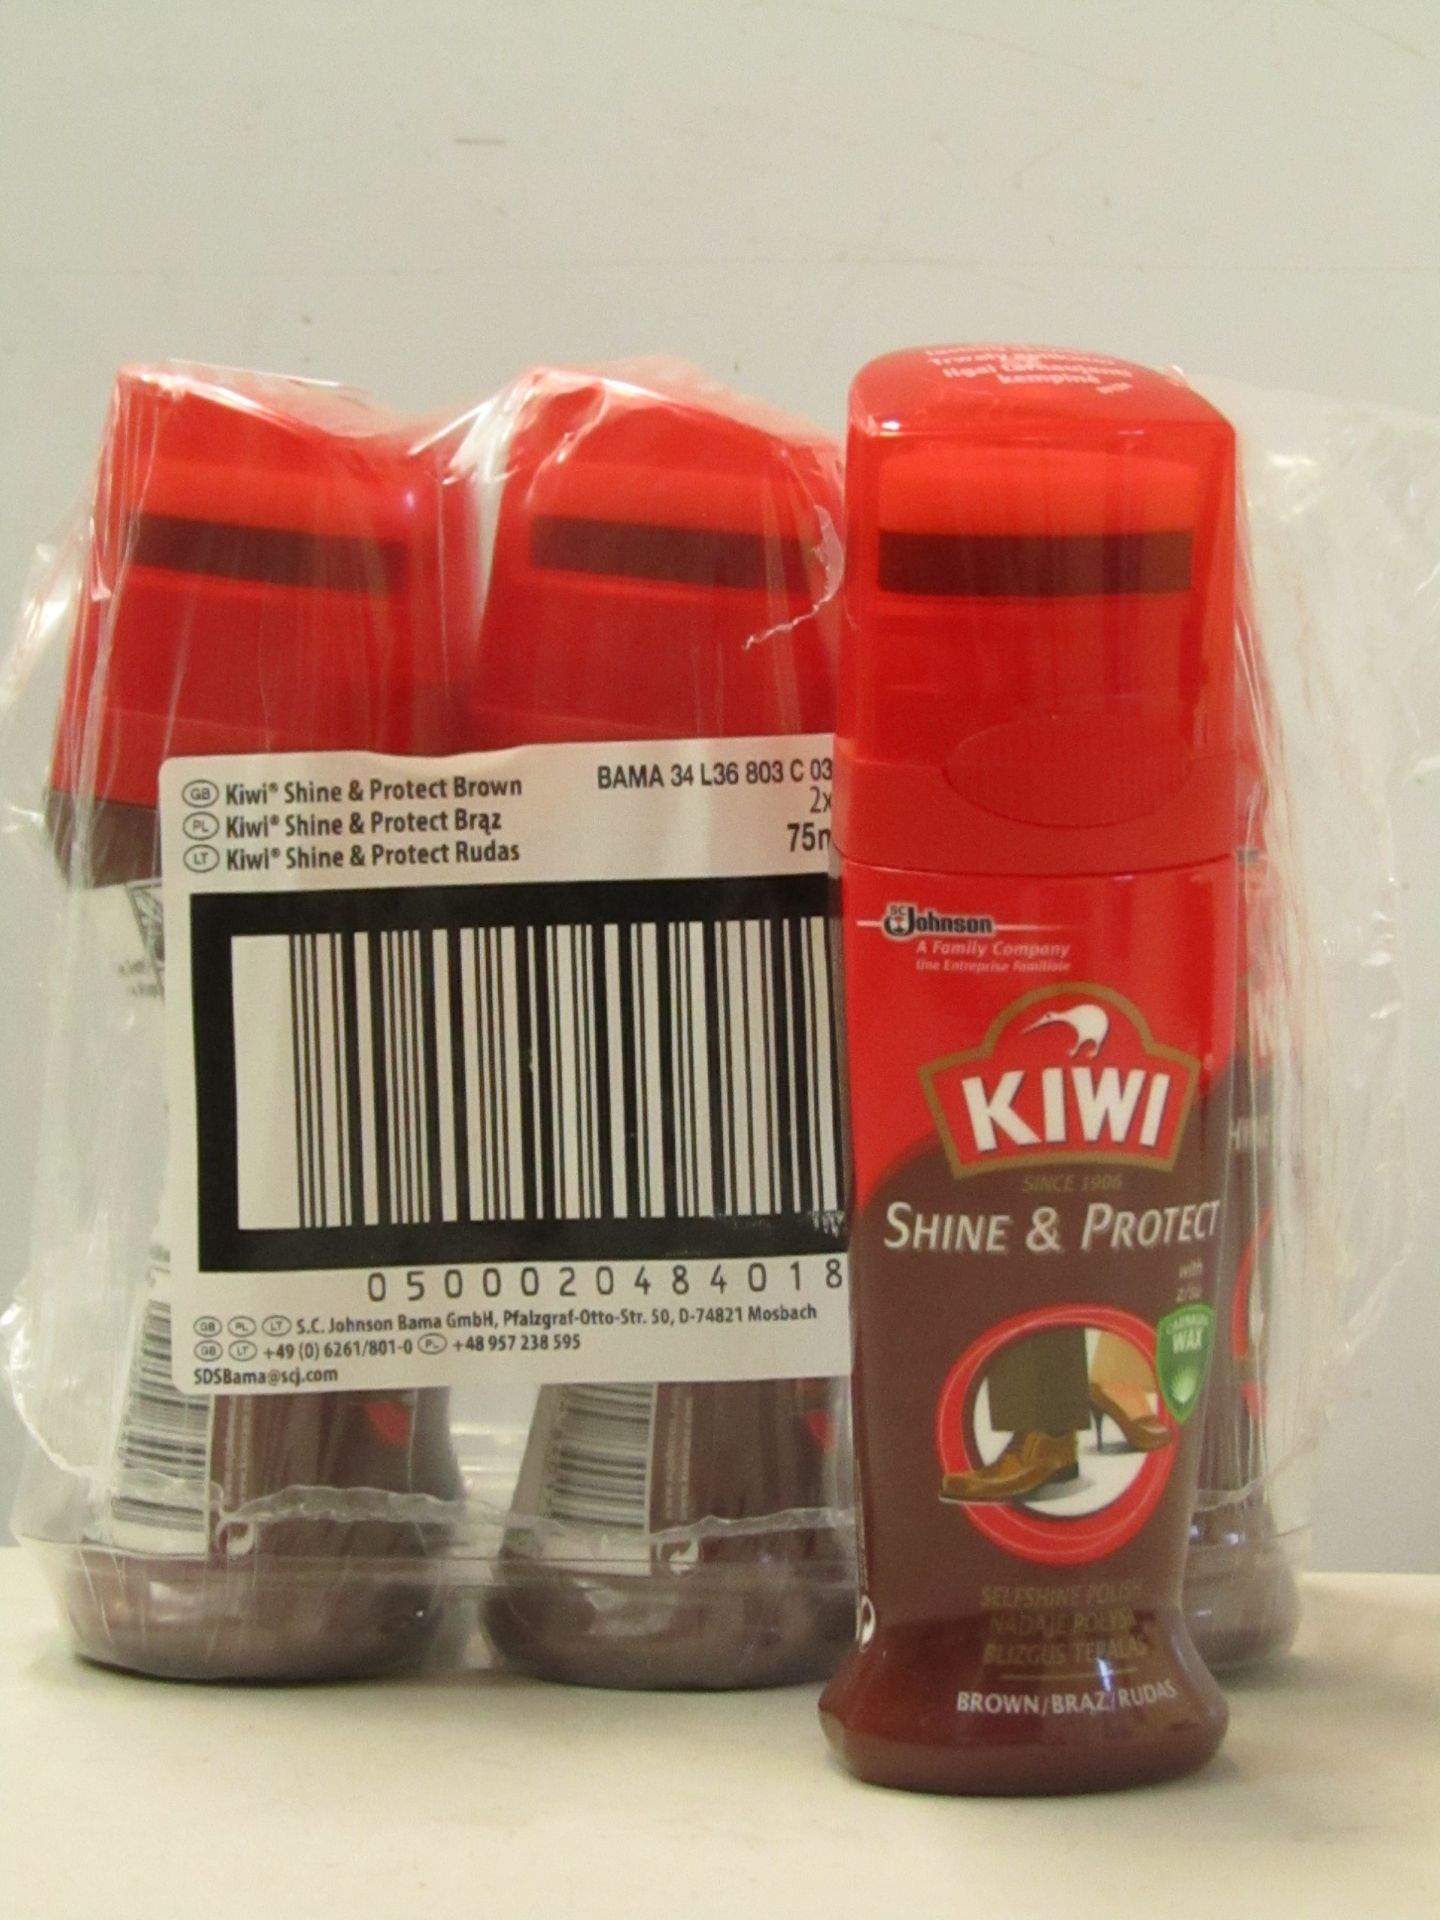 1x packs 6 per pack of Kiwi Shine & Protect 75ml Brown Shoe Polish